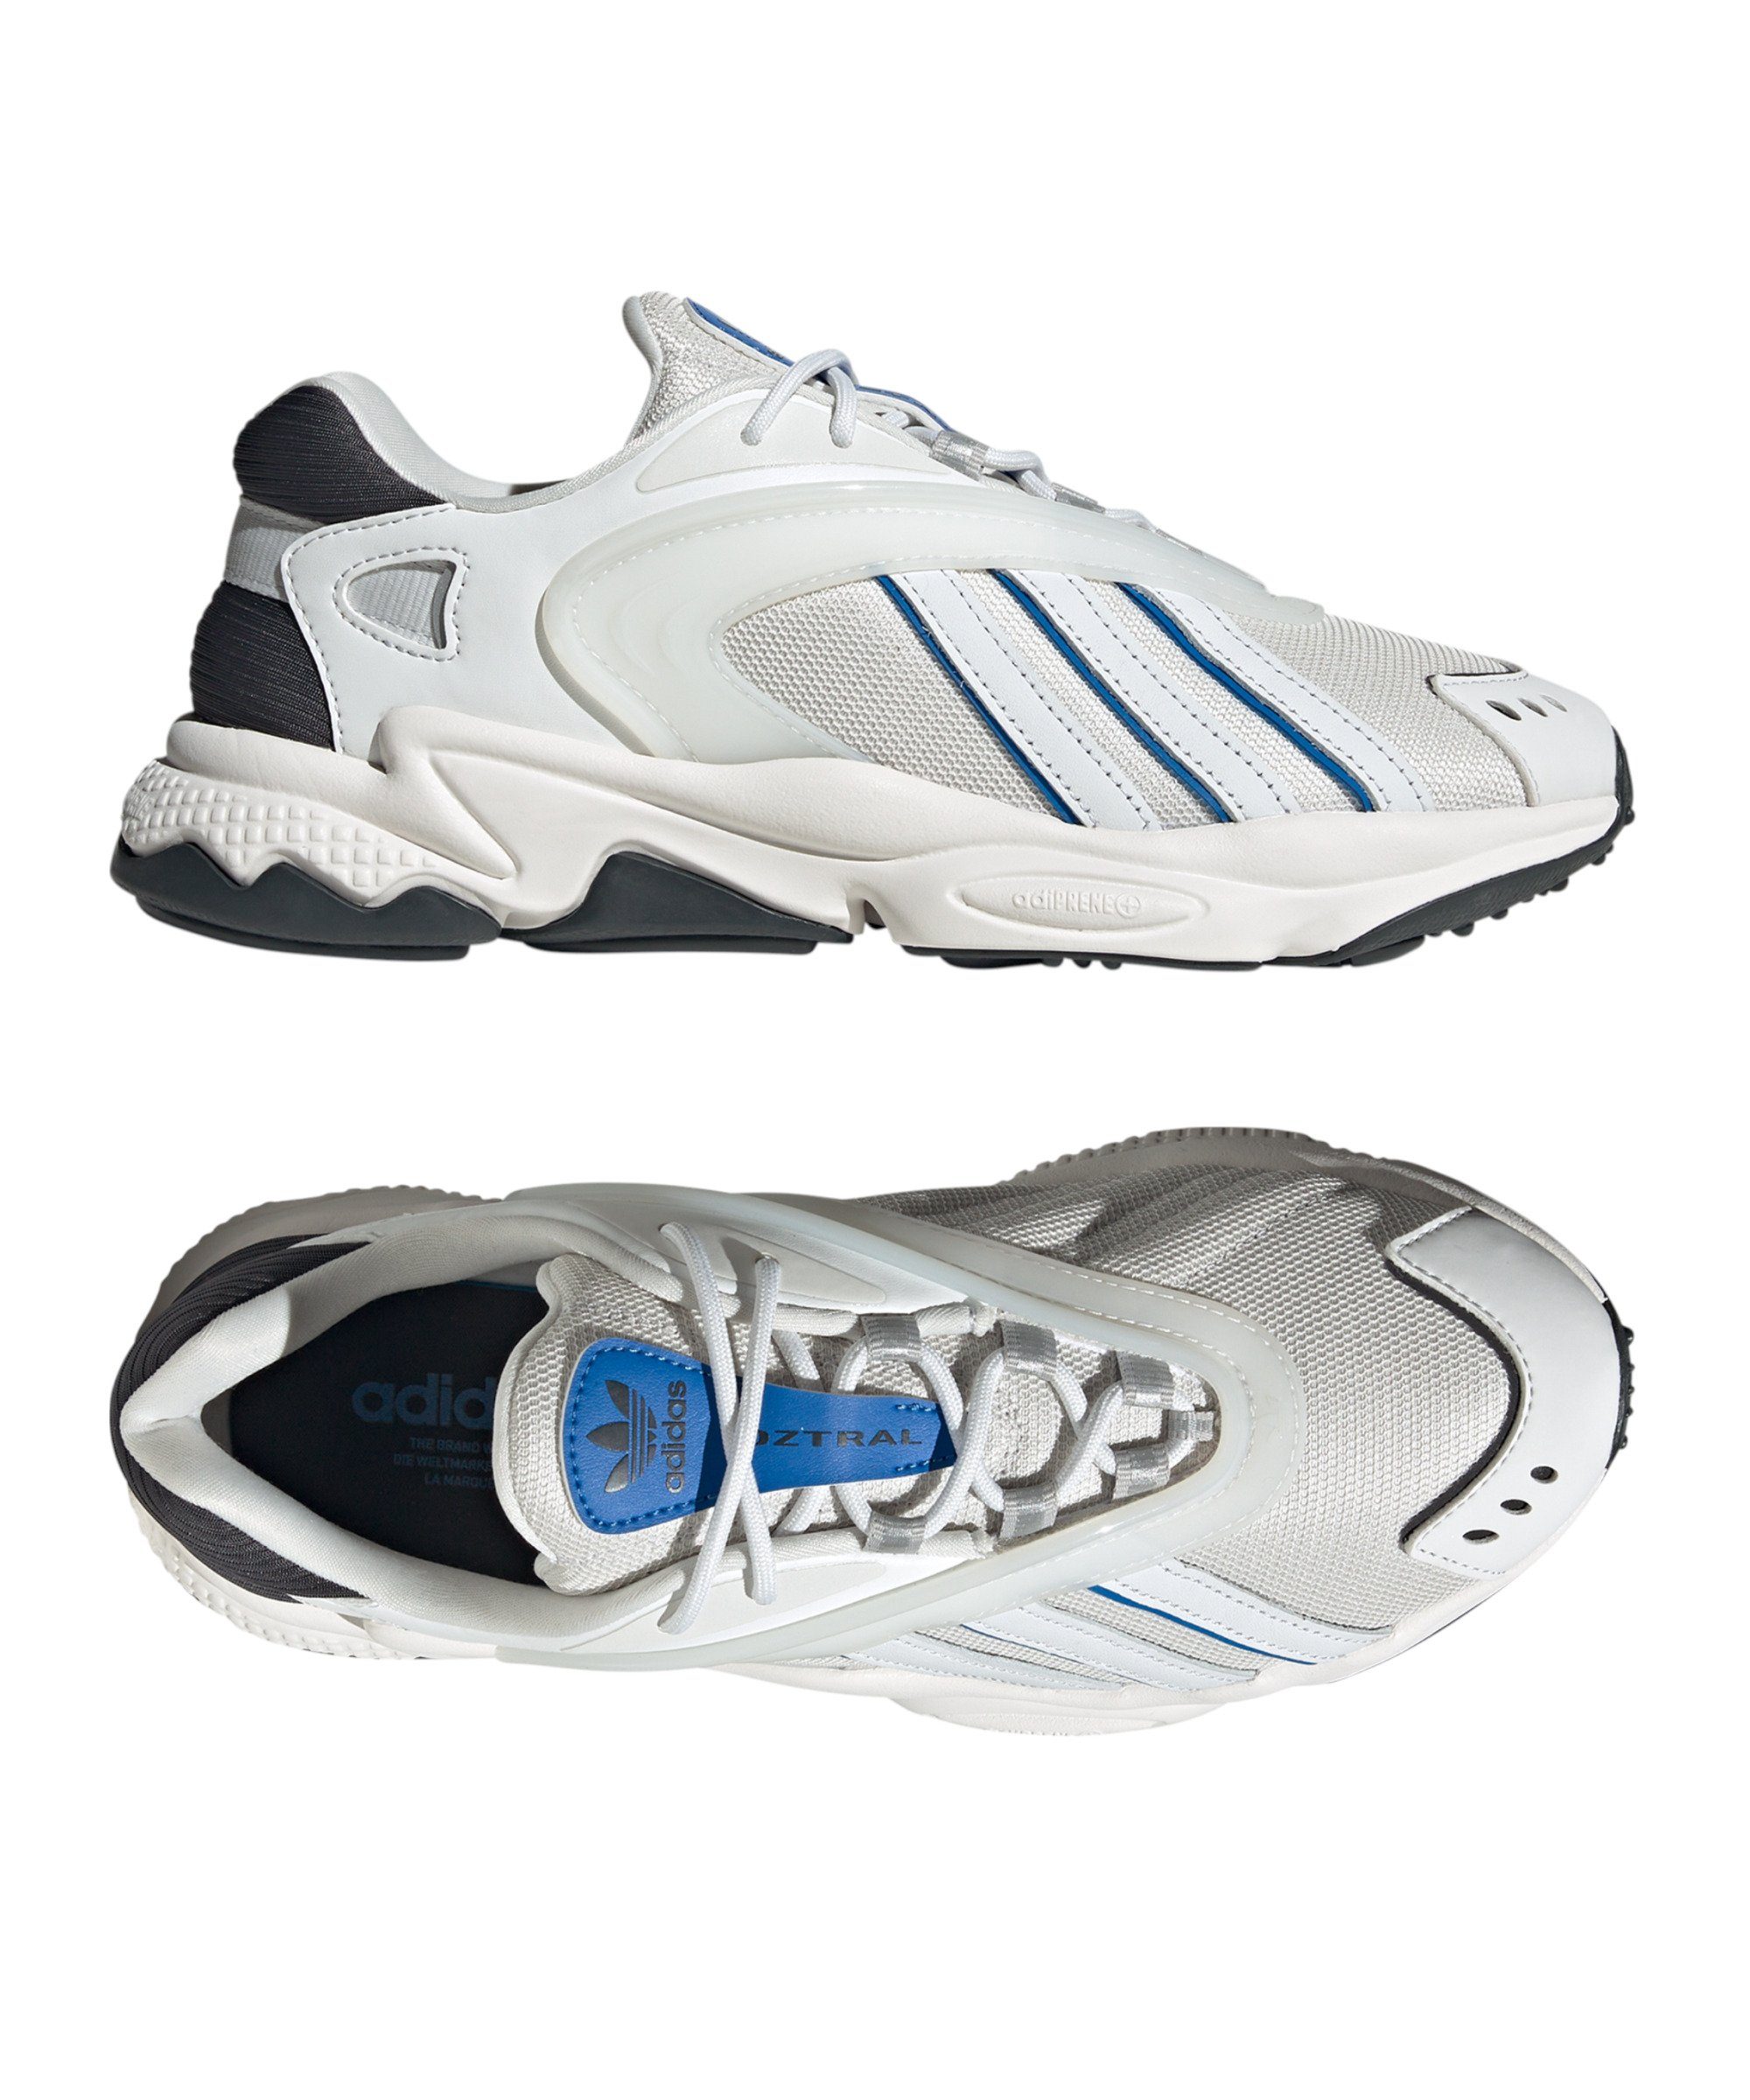 Originals adidas Oztral weissweissblau Sneaker